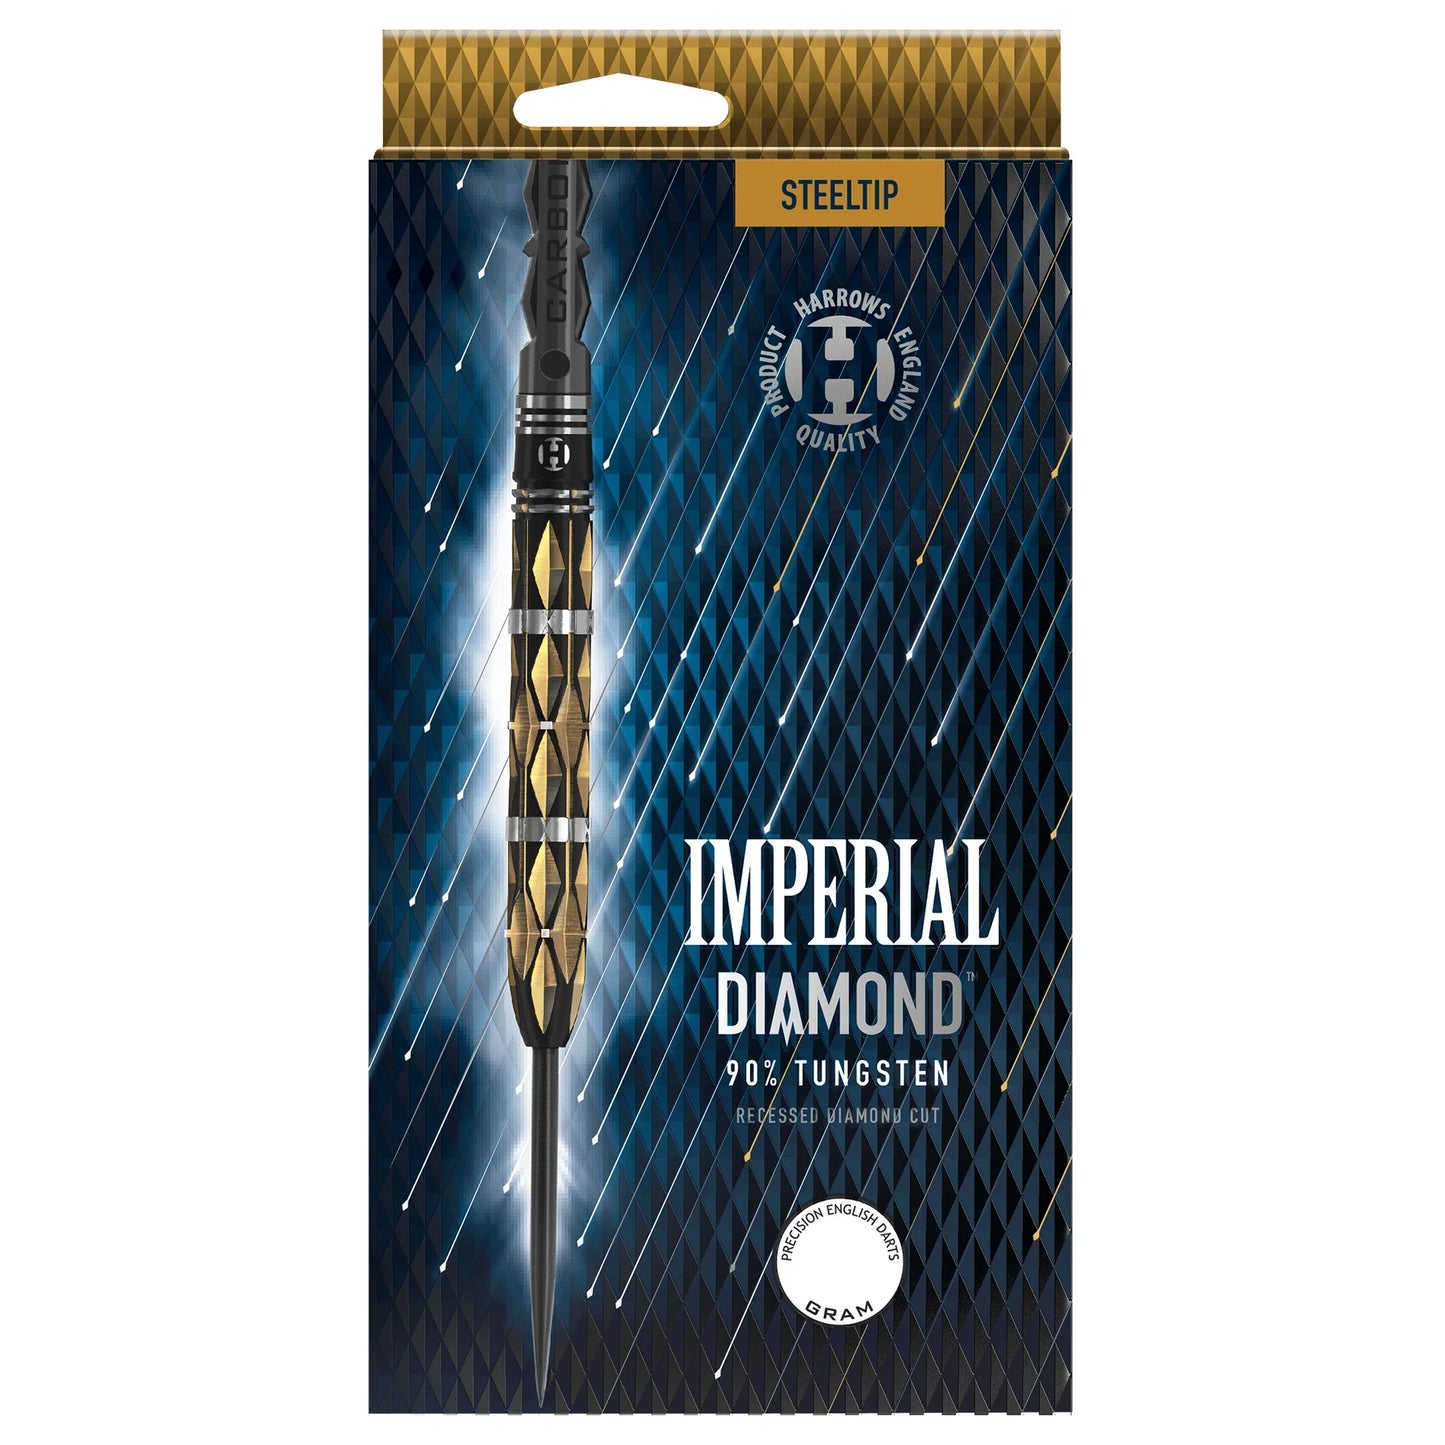 Harrows Imperial Diamond 22g Darts